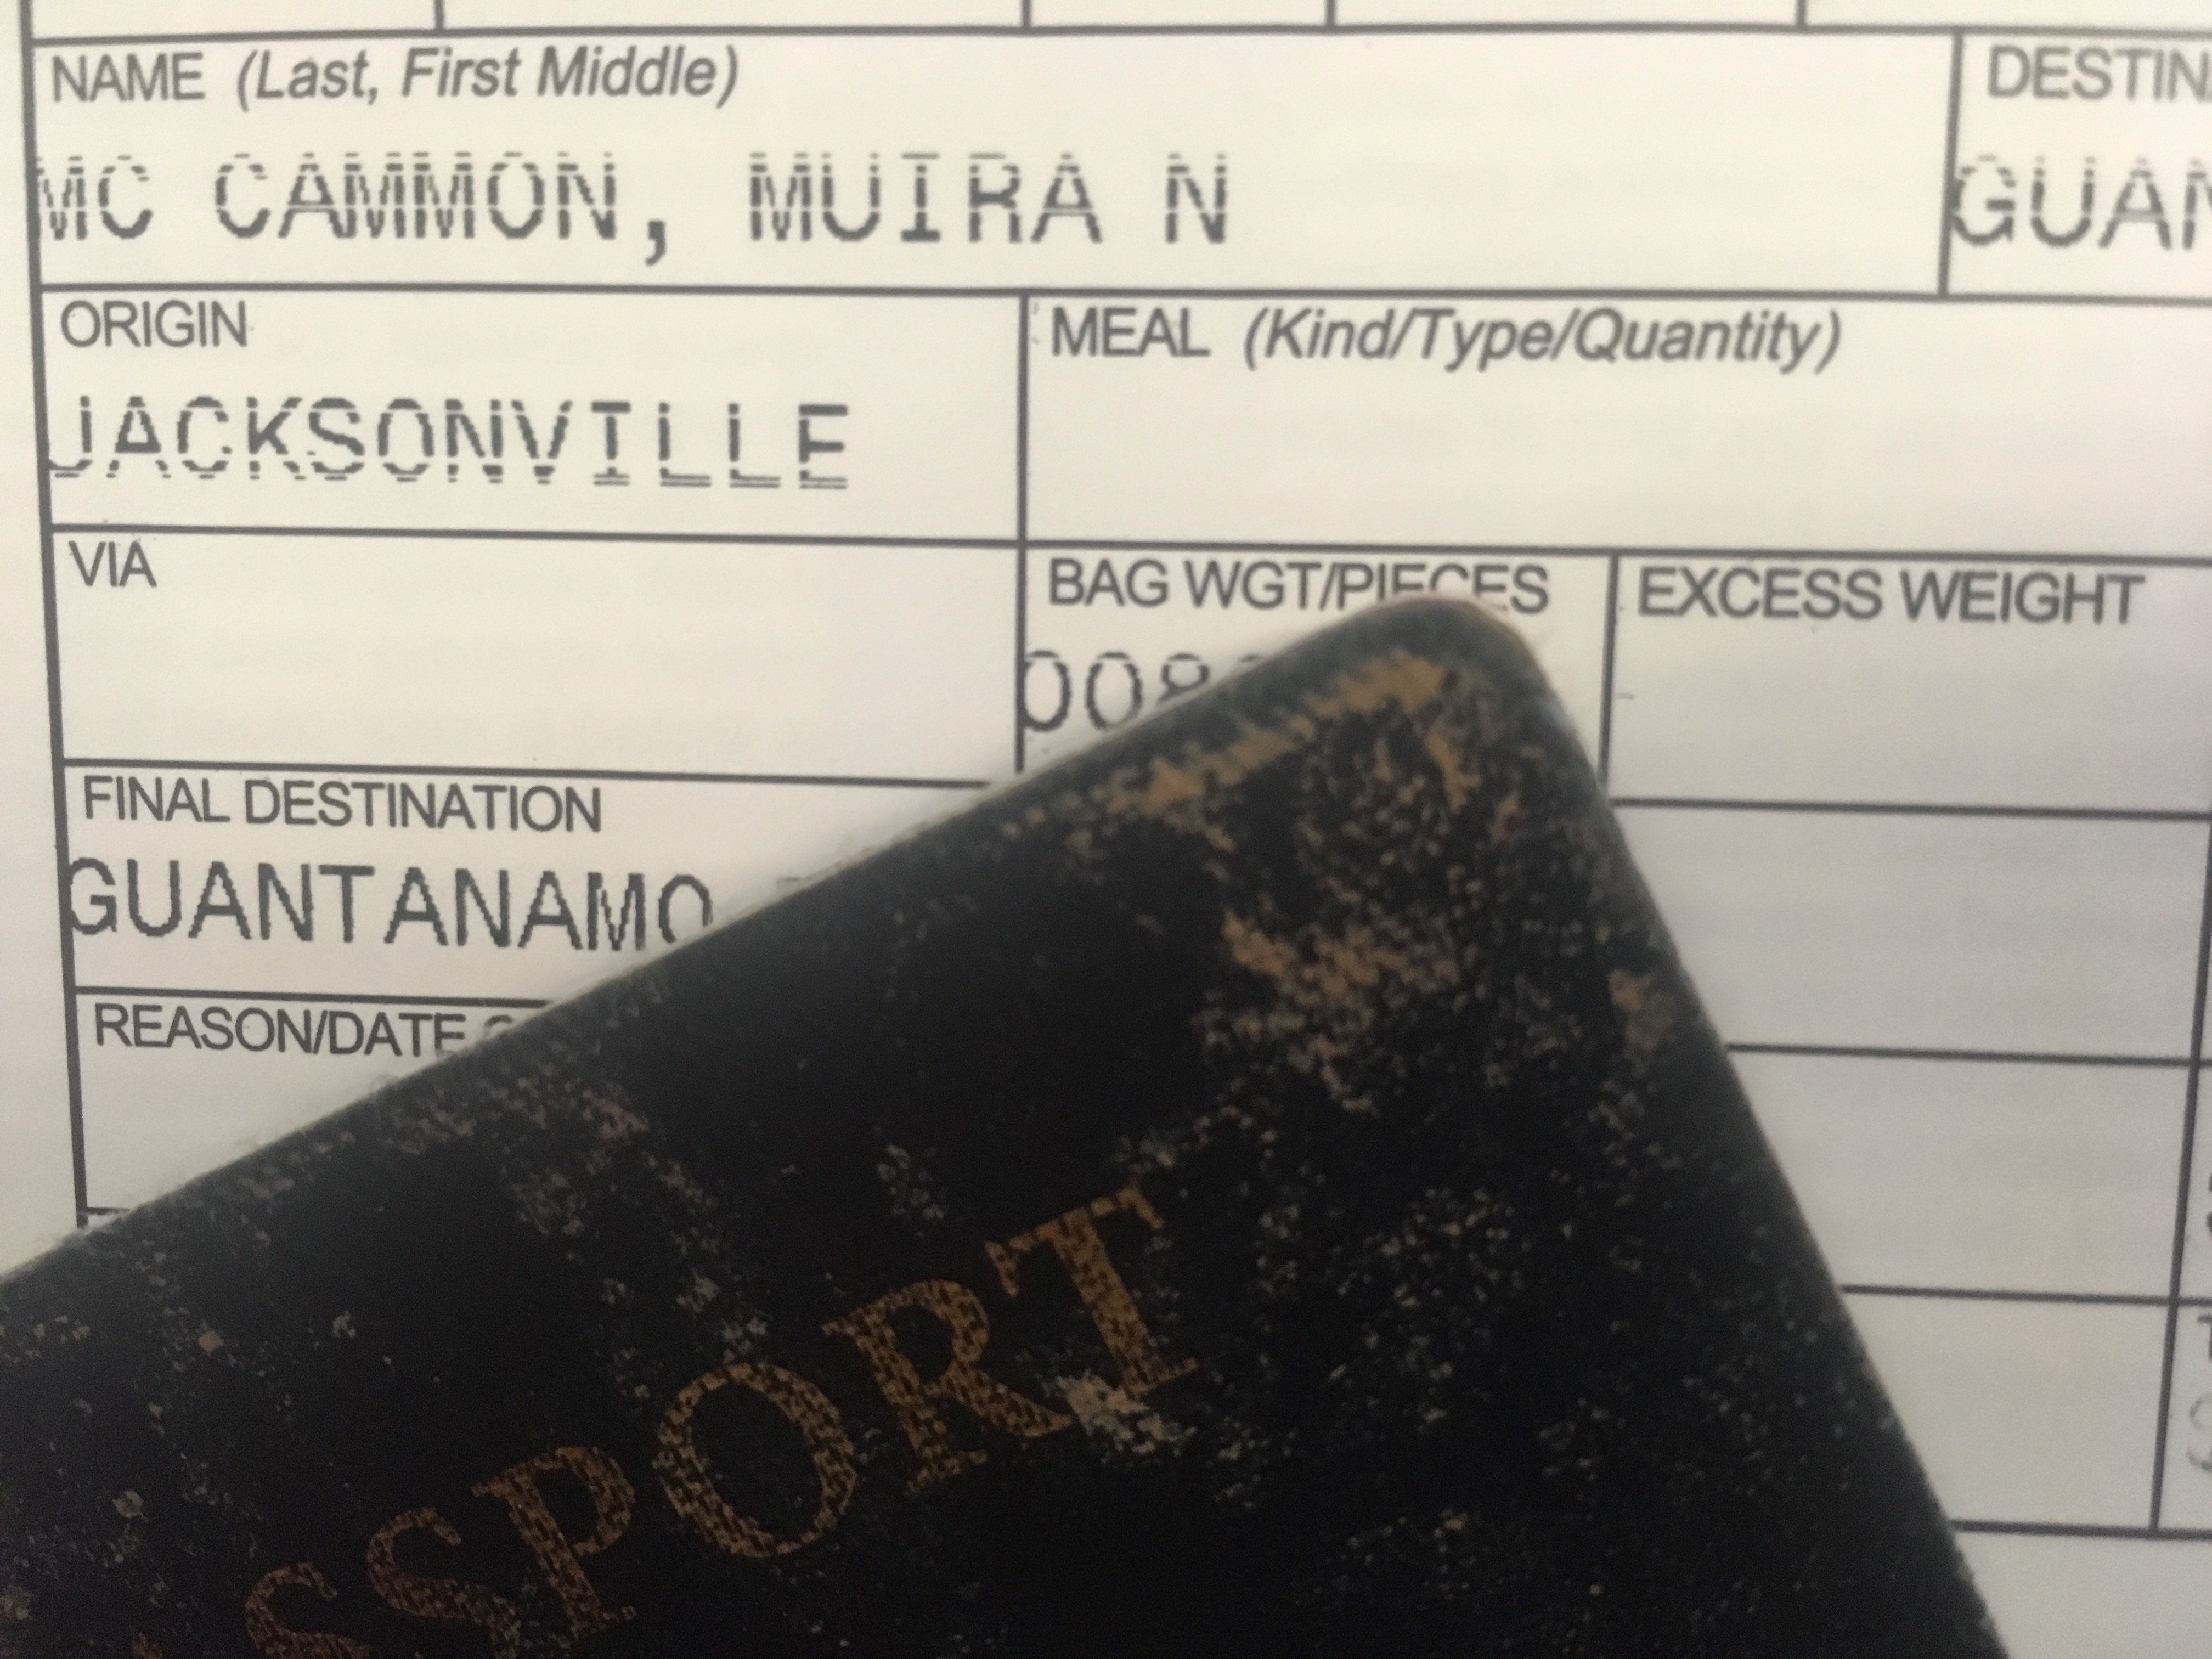 A shot of paperwork that reads, "McCammon, Muira N," "Origin: Jacksonville," "Final Destination: Guantanamo," "Bag Wgt/Pieces," and "Excess Weight." 